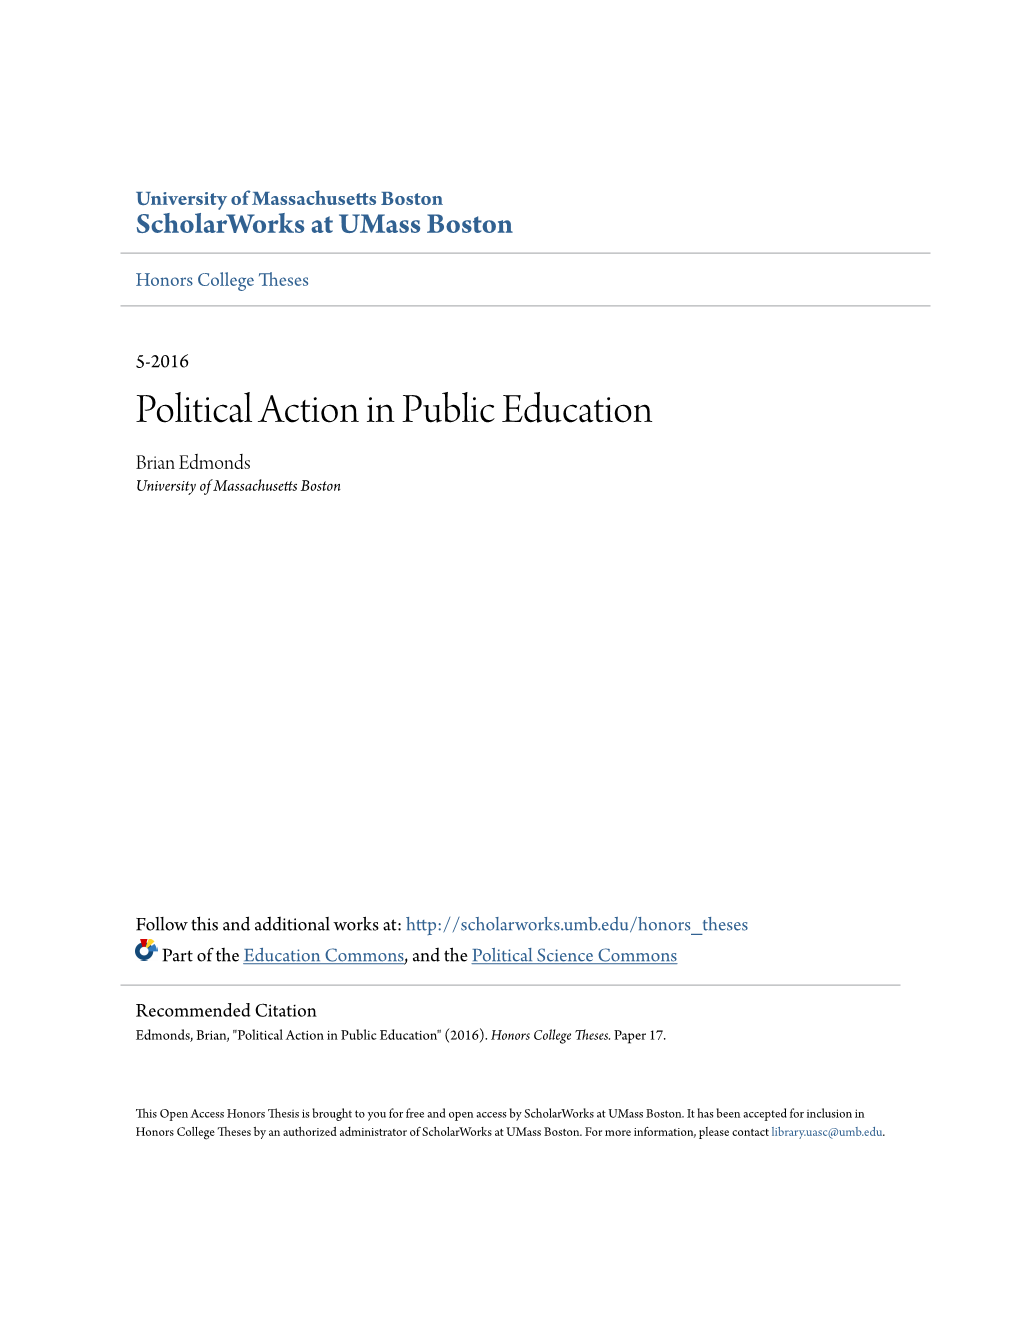 Political Action in Public Education Brian Edmonds University of Massachusetts Boston